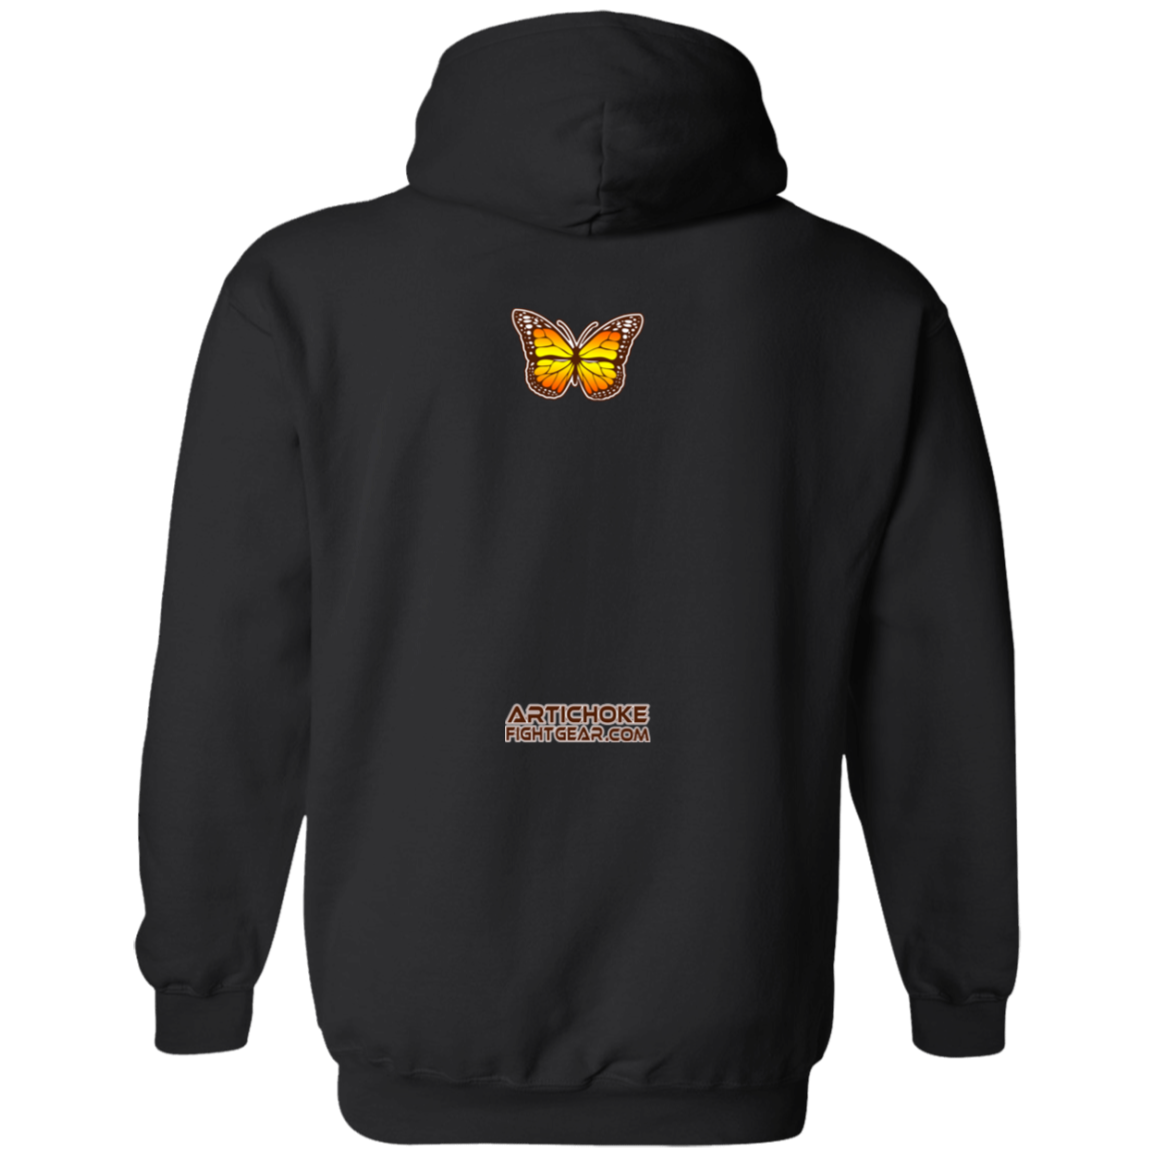 Artichoke Fight Gear Custom Design #6. Lepidopterology (Study of butterflies). Butterfly Guard. Basic Pullover Hoodie